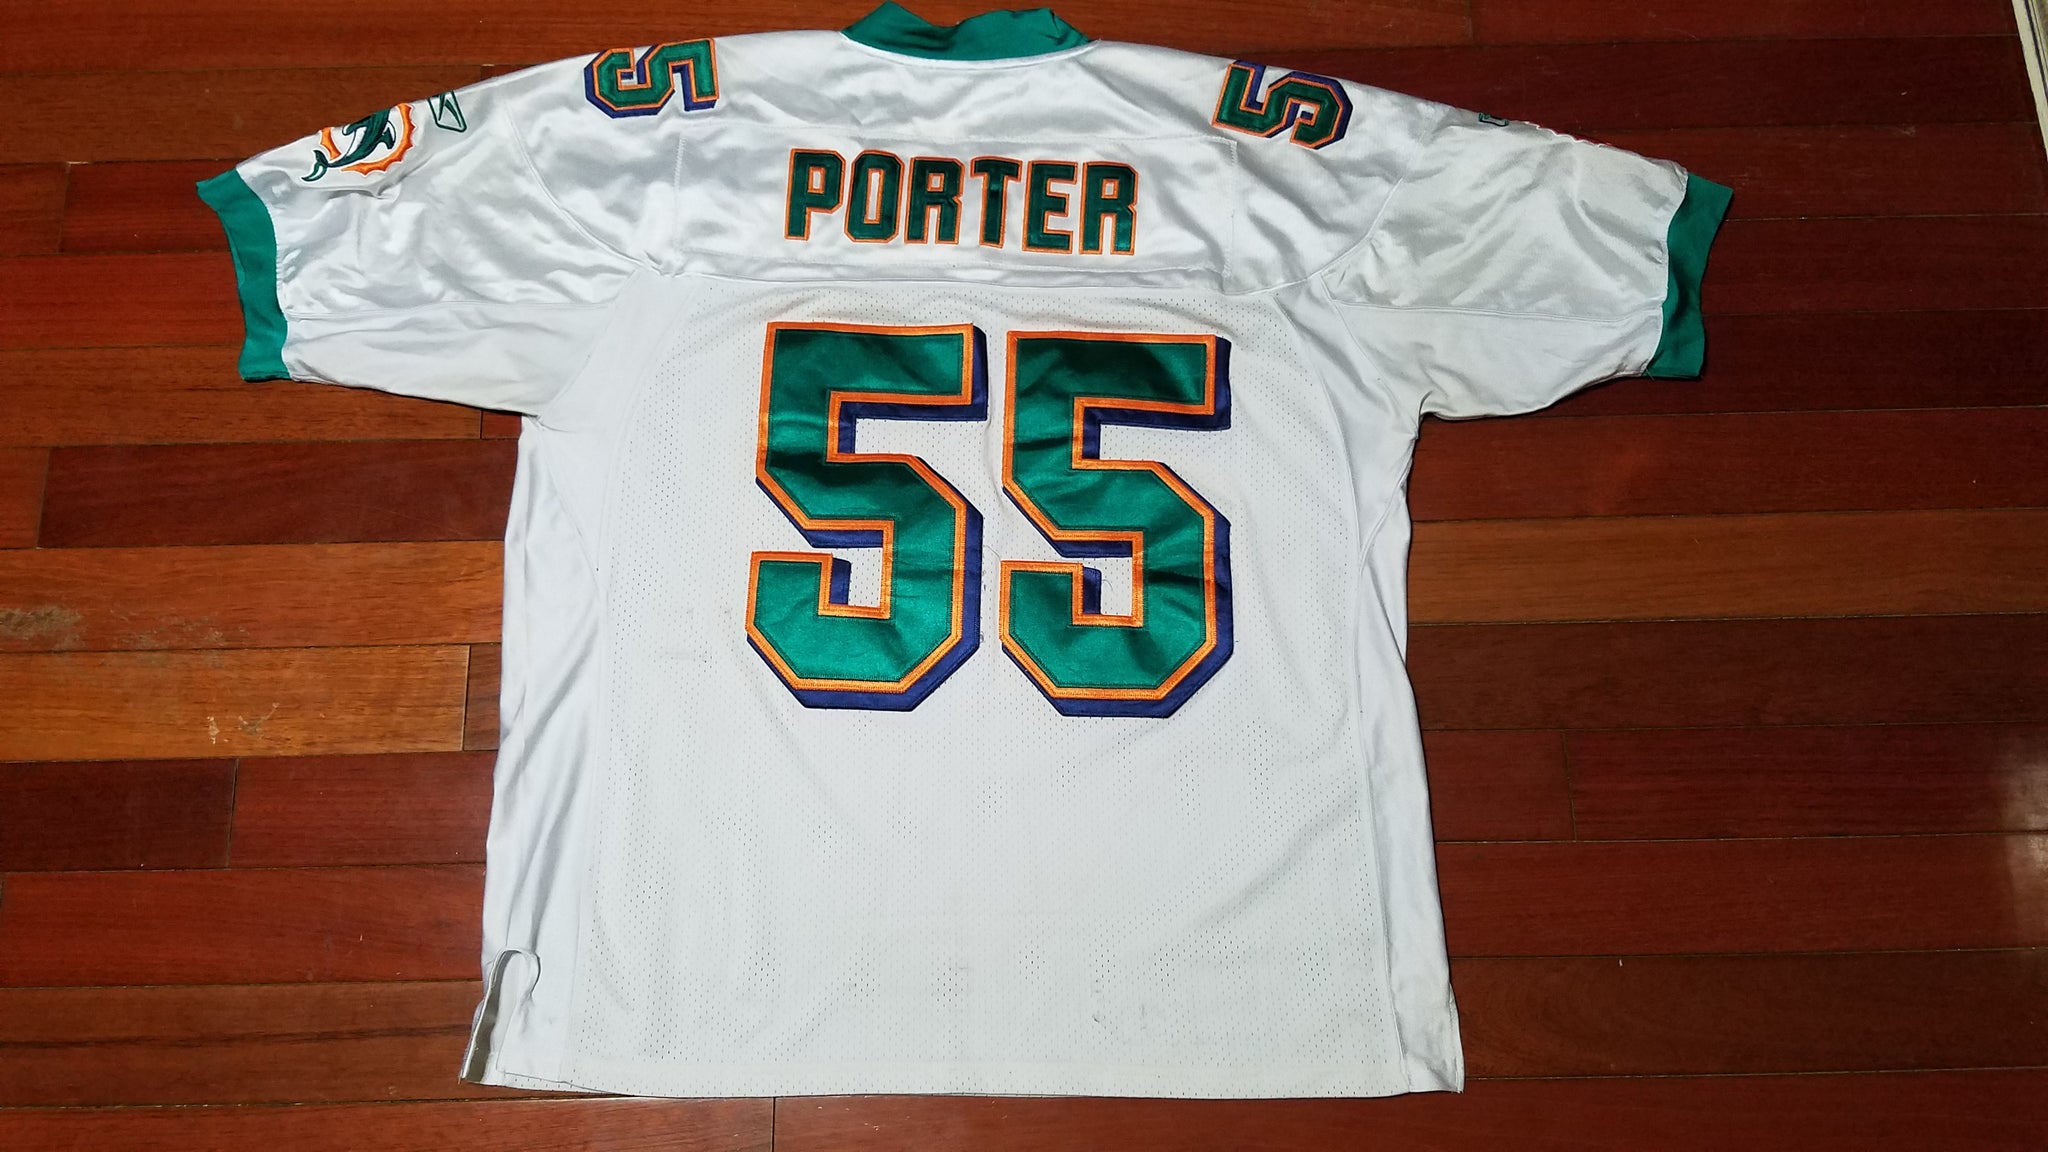 joey porter jersey